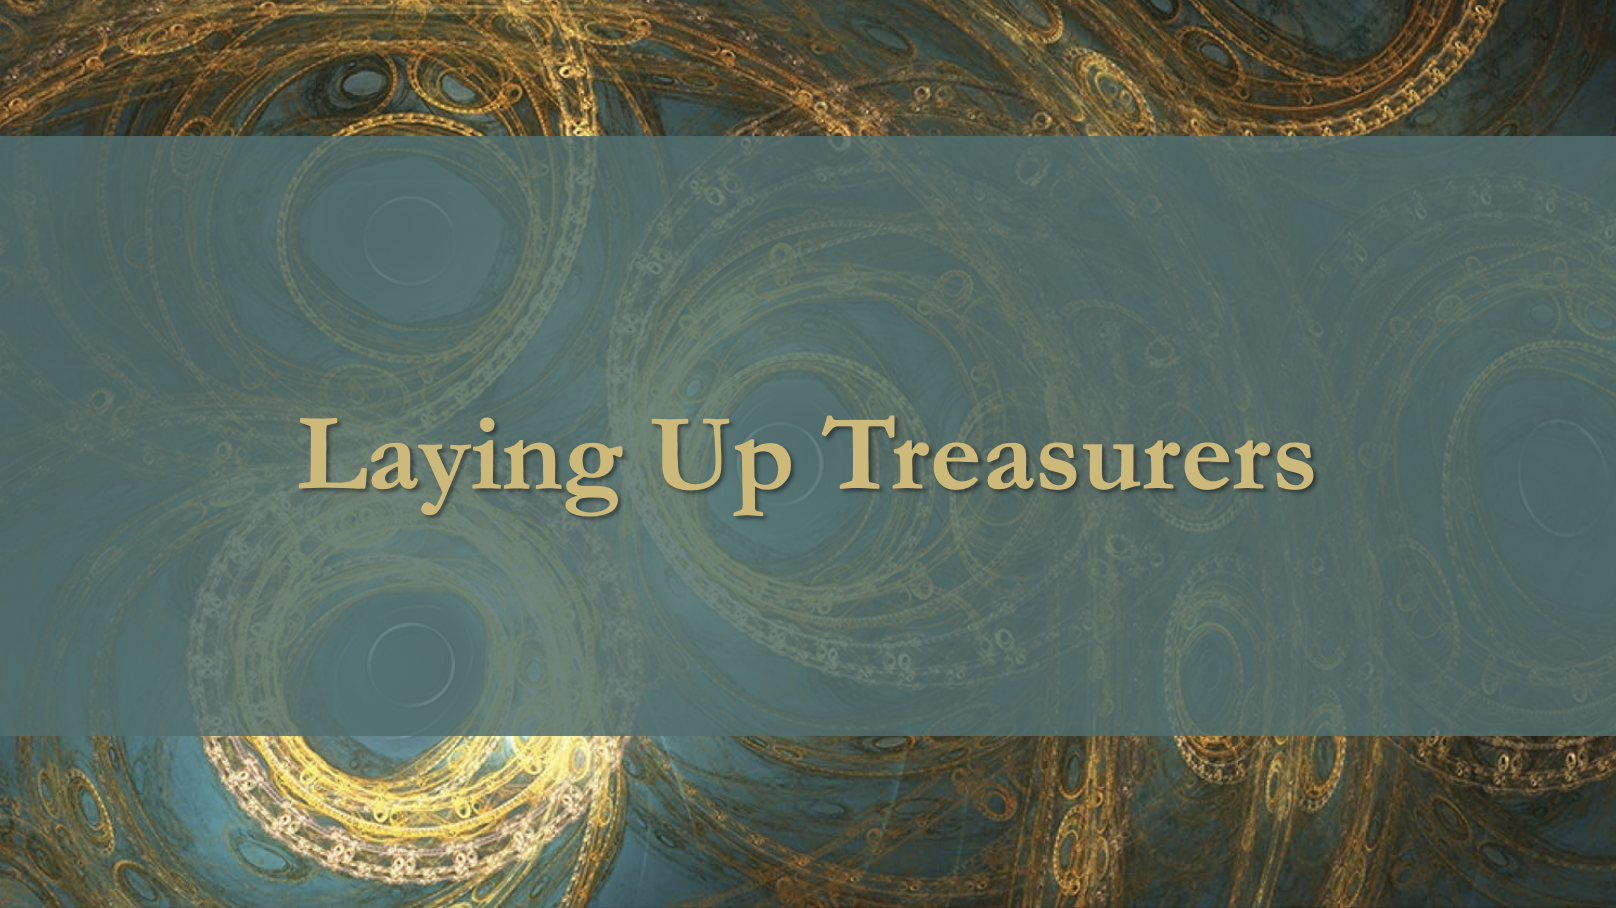 Laying Up Treasurers